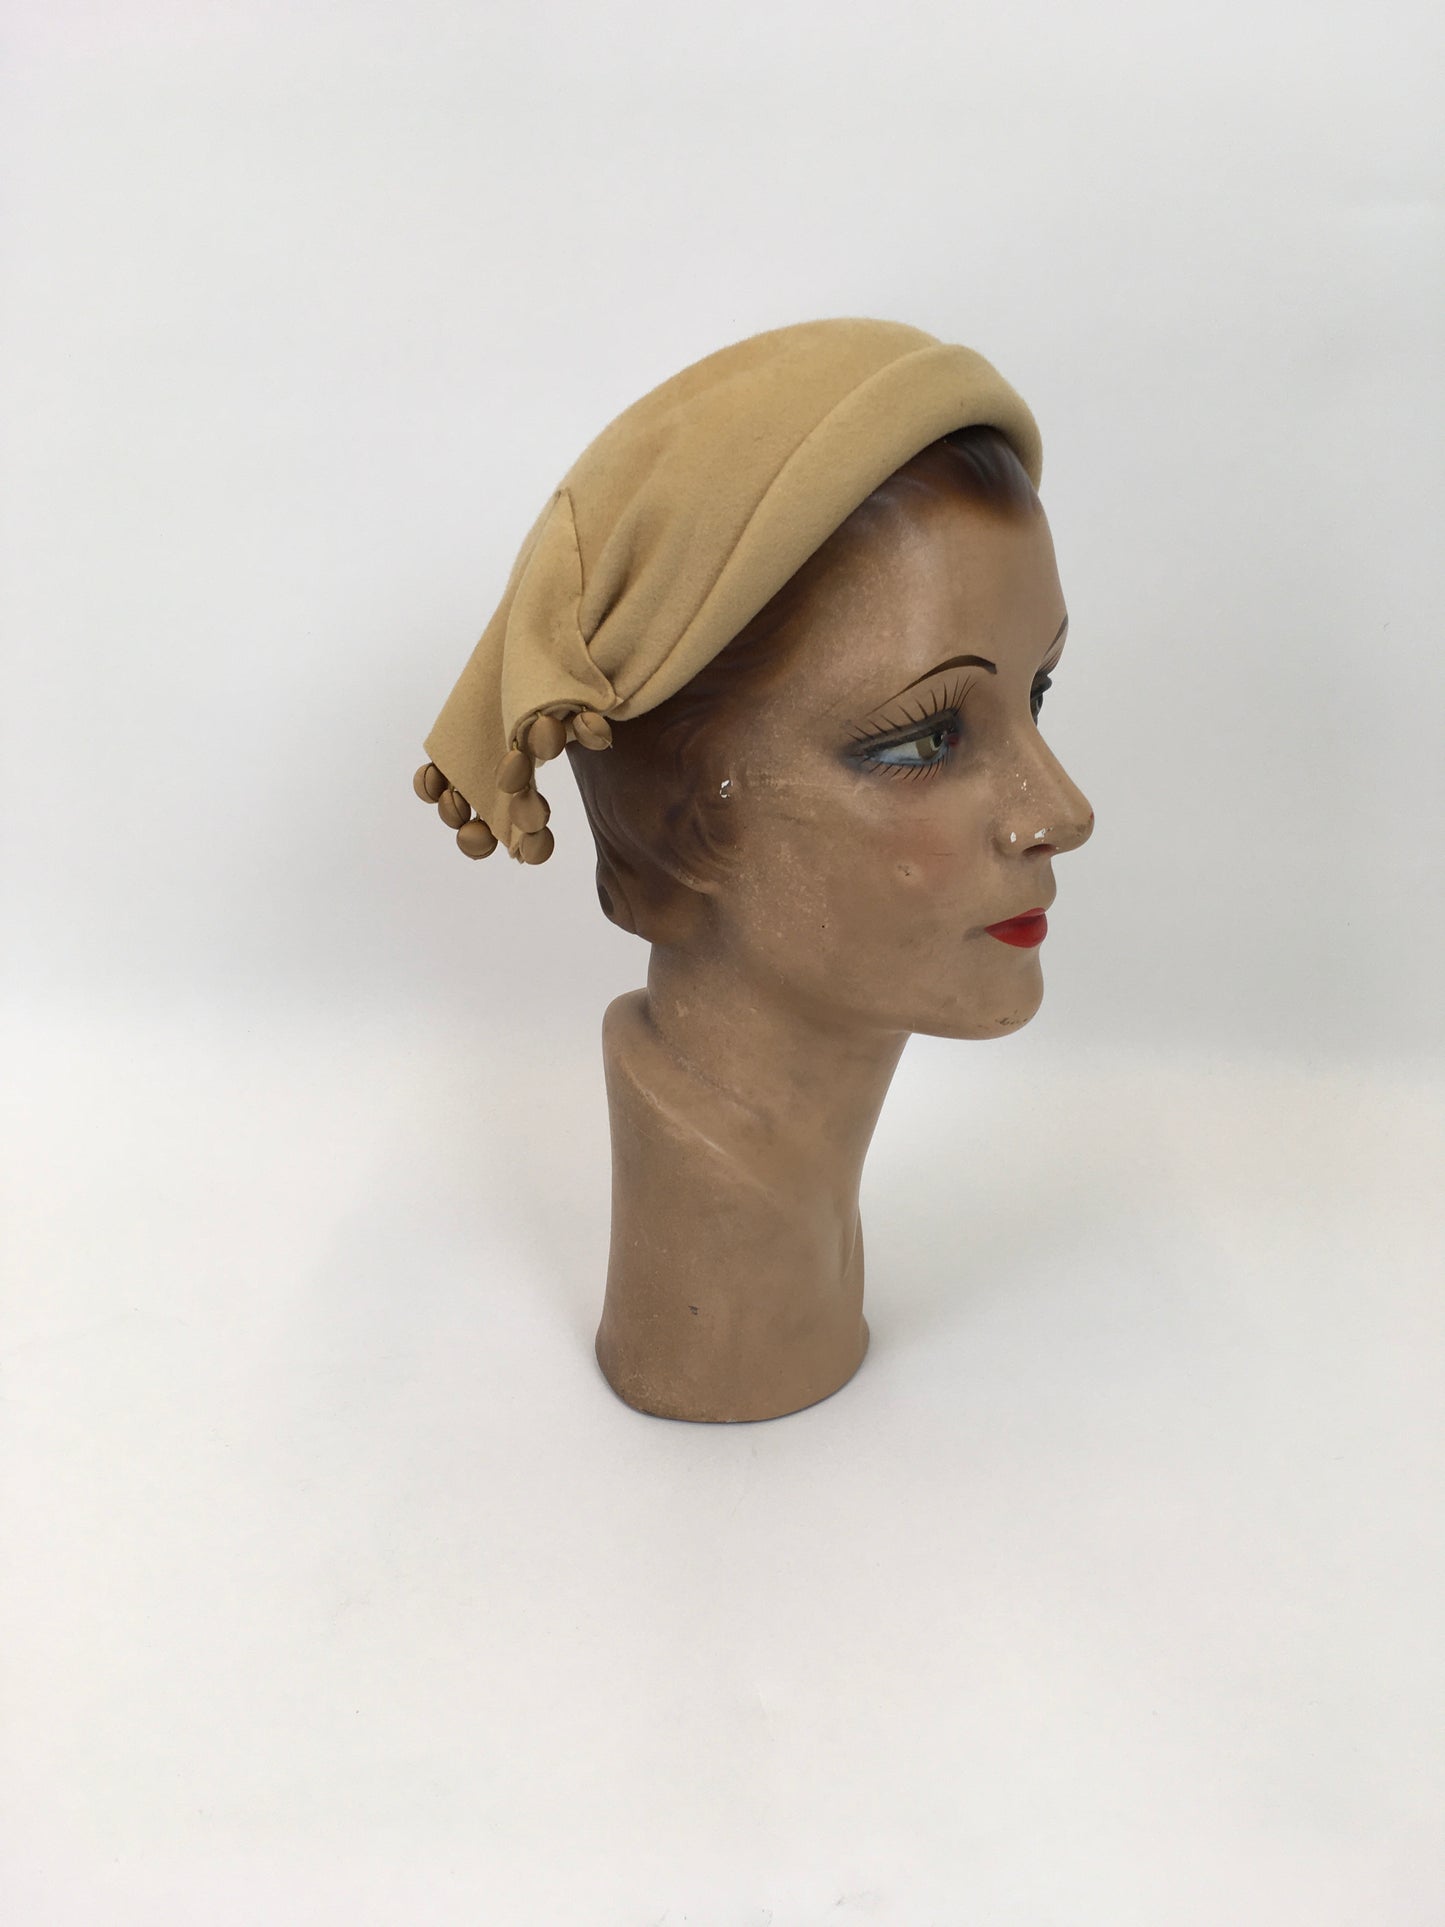 Original Late 1940’s Early 1950’s Felt Headpiece - In Light Mustard